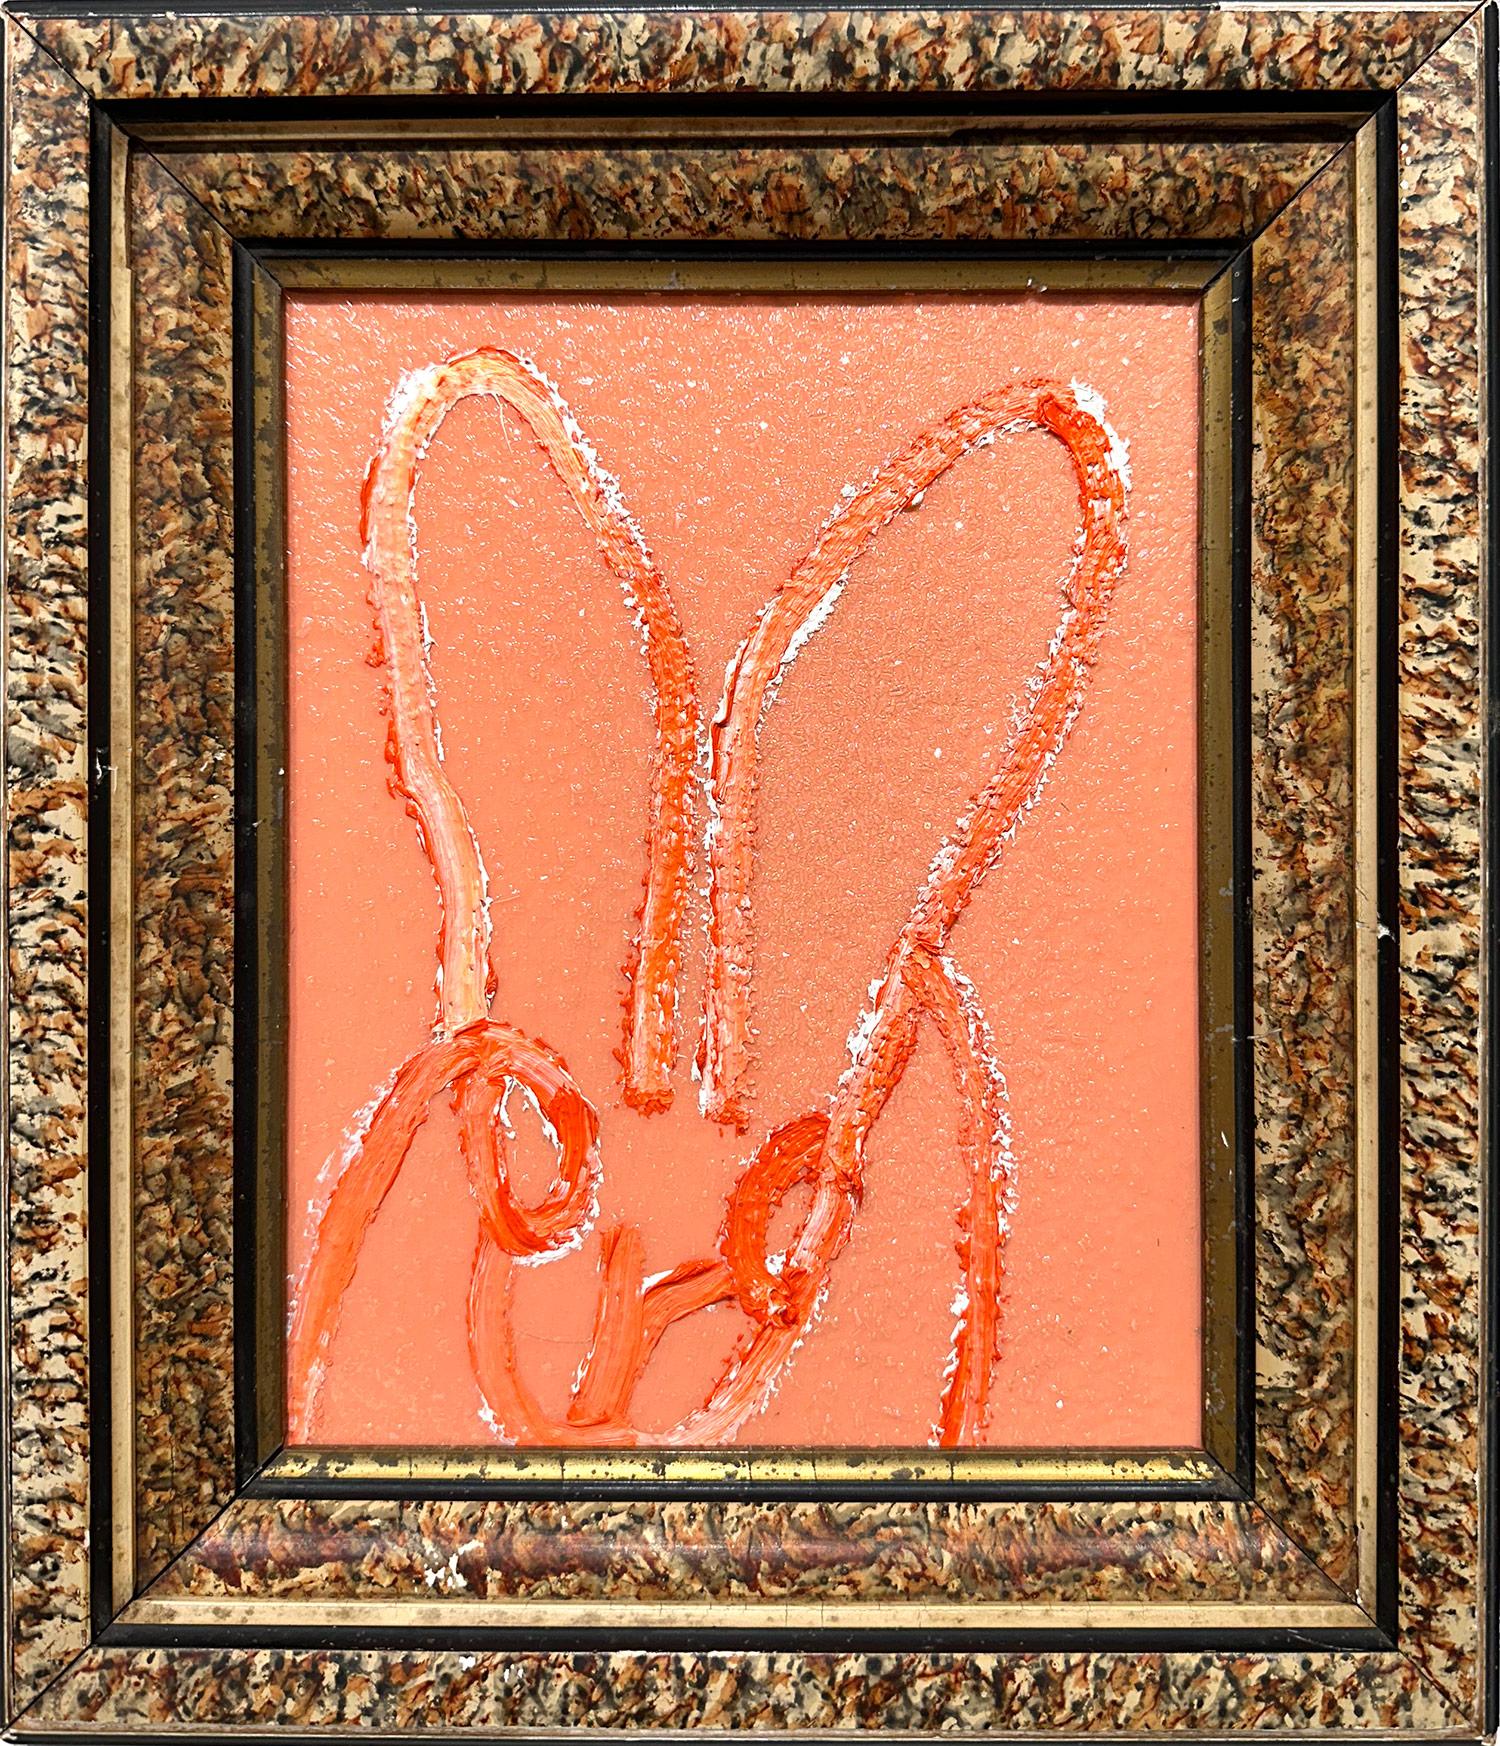 "Mellon" Bunny on Holland Tulip Orange Oil Painting on Wood Panel w Diamond Dust